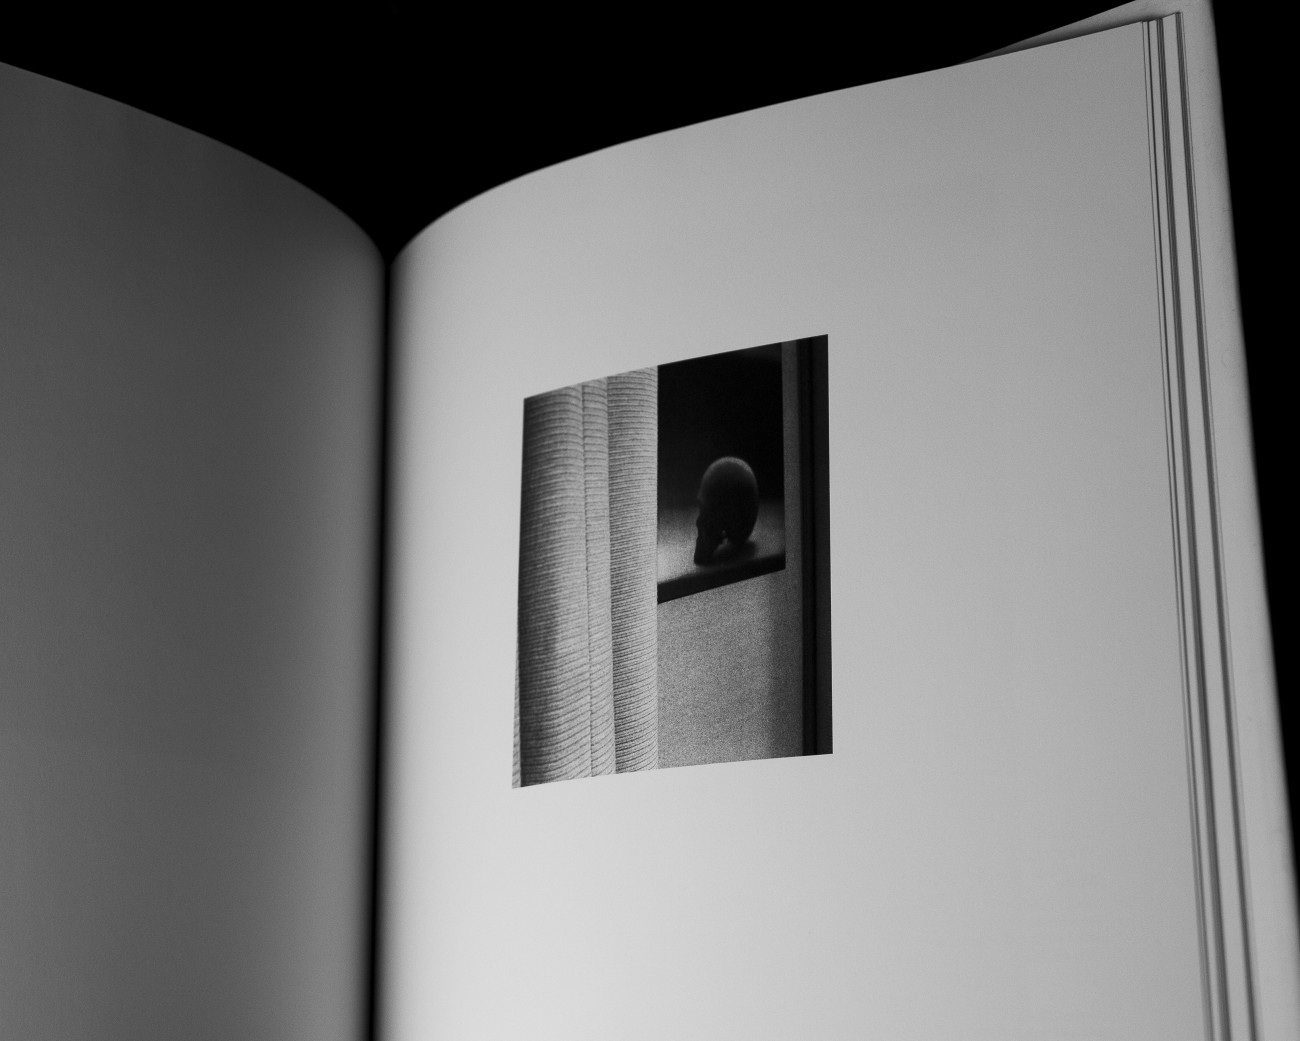 Steve Giasson. Performance invisible n&deg; 226 (Cr&acirc;ner). D'apr&egrave;s Louise Lawler. Untitled. 2001/2002. D'apr&egrave;s Gerhard Richter. Sch&auml;del (545-3) [Cr&acirc;ne]. 1983. In Louise Lawler. 2012. Louise Lawler and/or Gerhard Richter: Photographs and Works. Munich : Schirmer/Mosel. Performeurs : Martin Vinette et Steve Giasson. Cr&eacute;dits photographiques :&nbsp;Martin Vinette et Steve Giasson. Retouches photographiques : Daniel Roy. 9 mars 2021. 
&nbsp;

&nbsp;